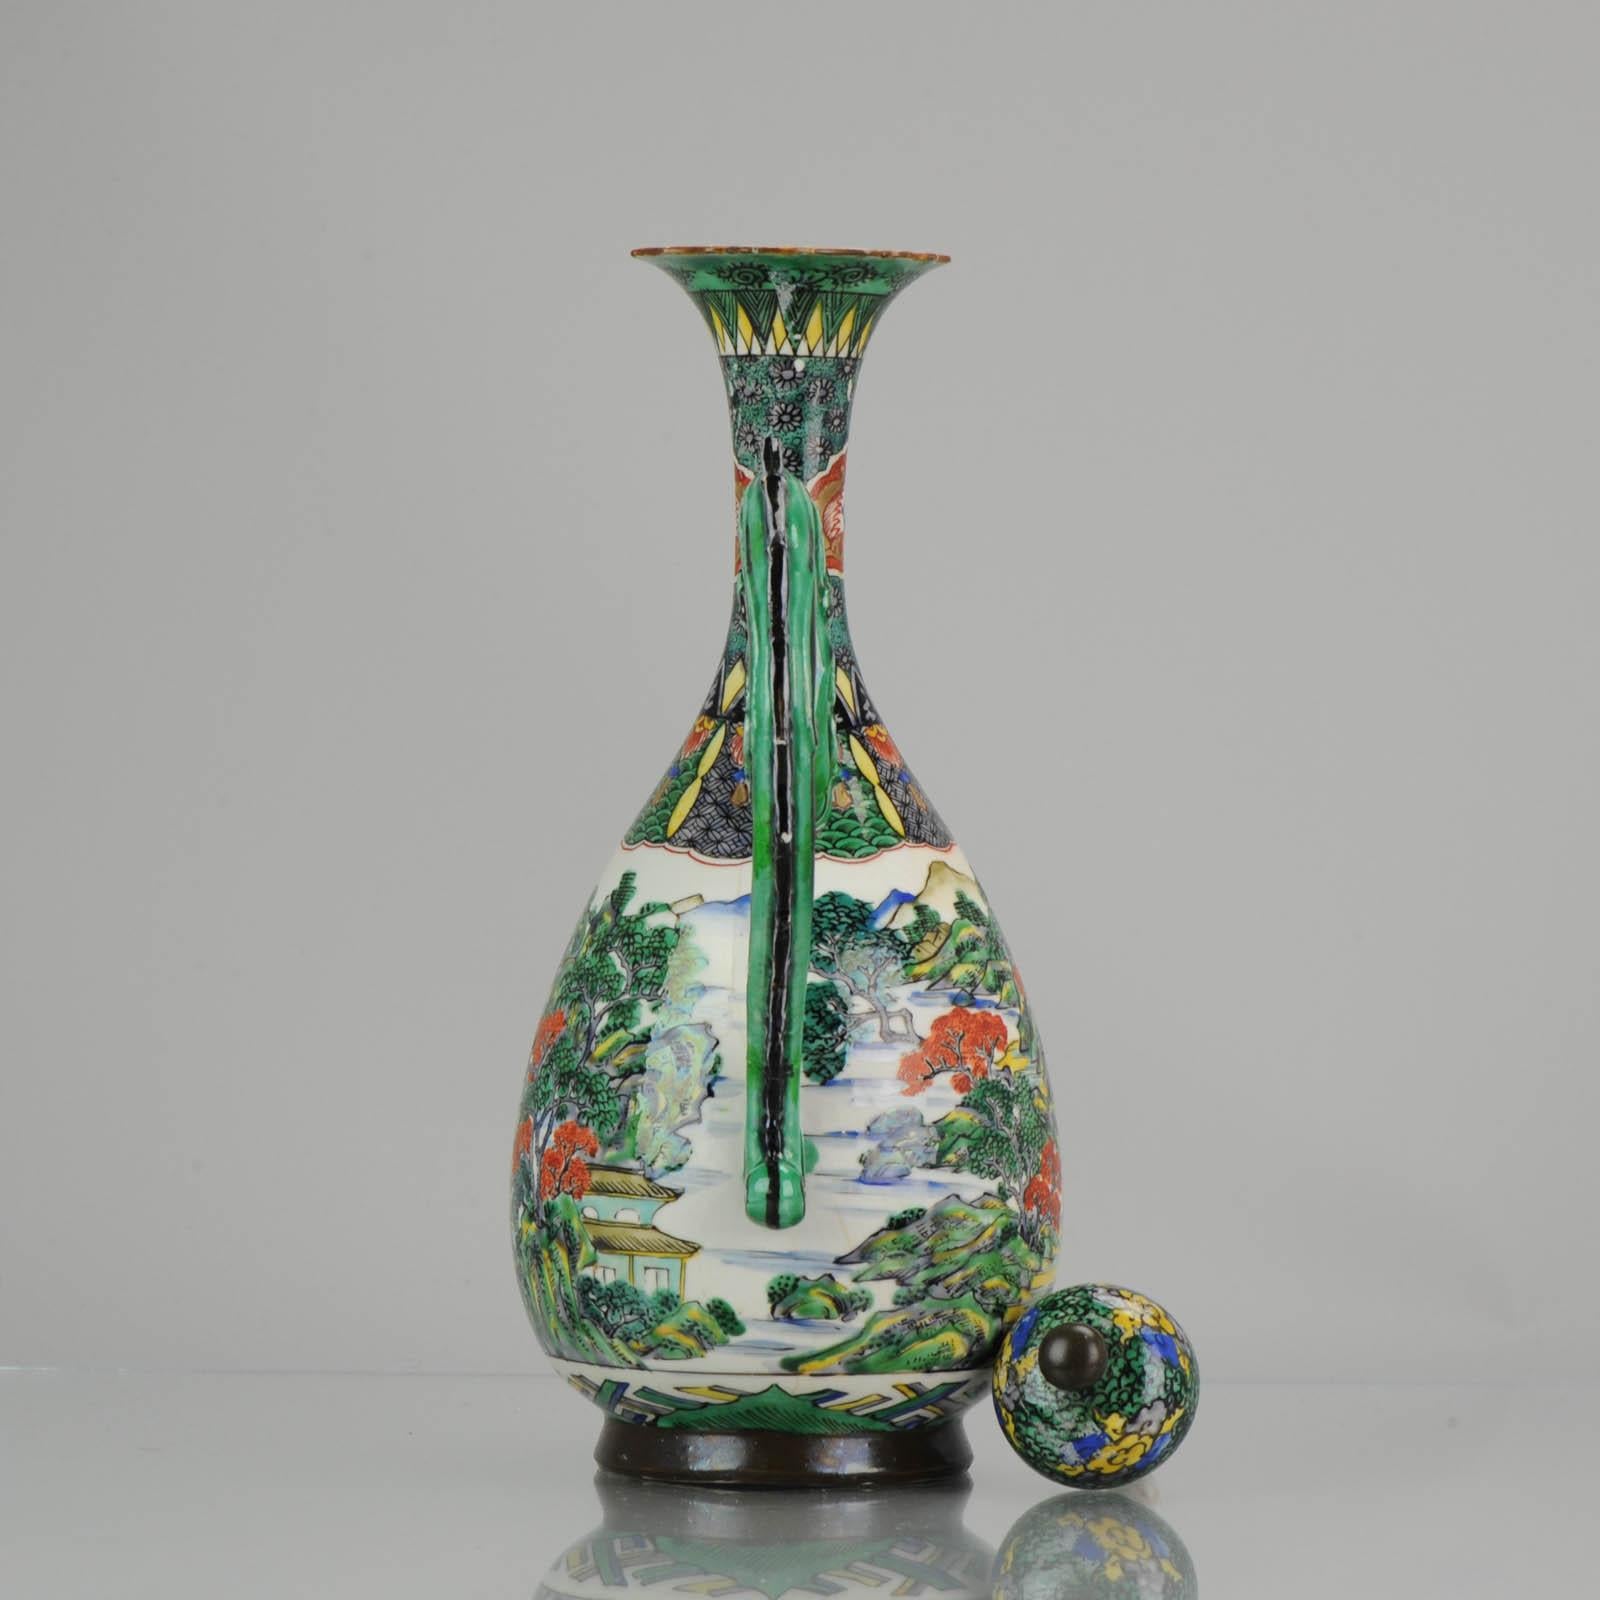 Earthenware Antique Japan Meiji Period Japanese Porcelain Islamic Ewer Dragon Bird